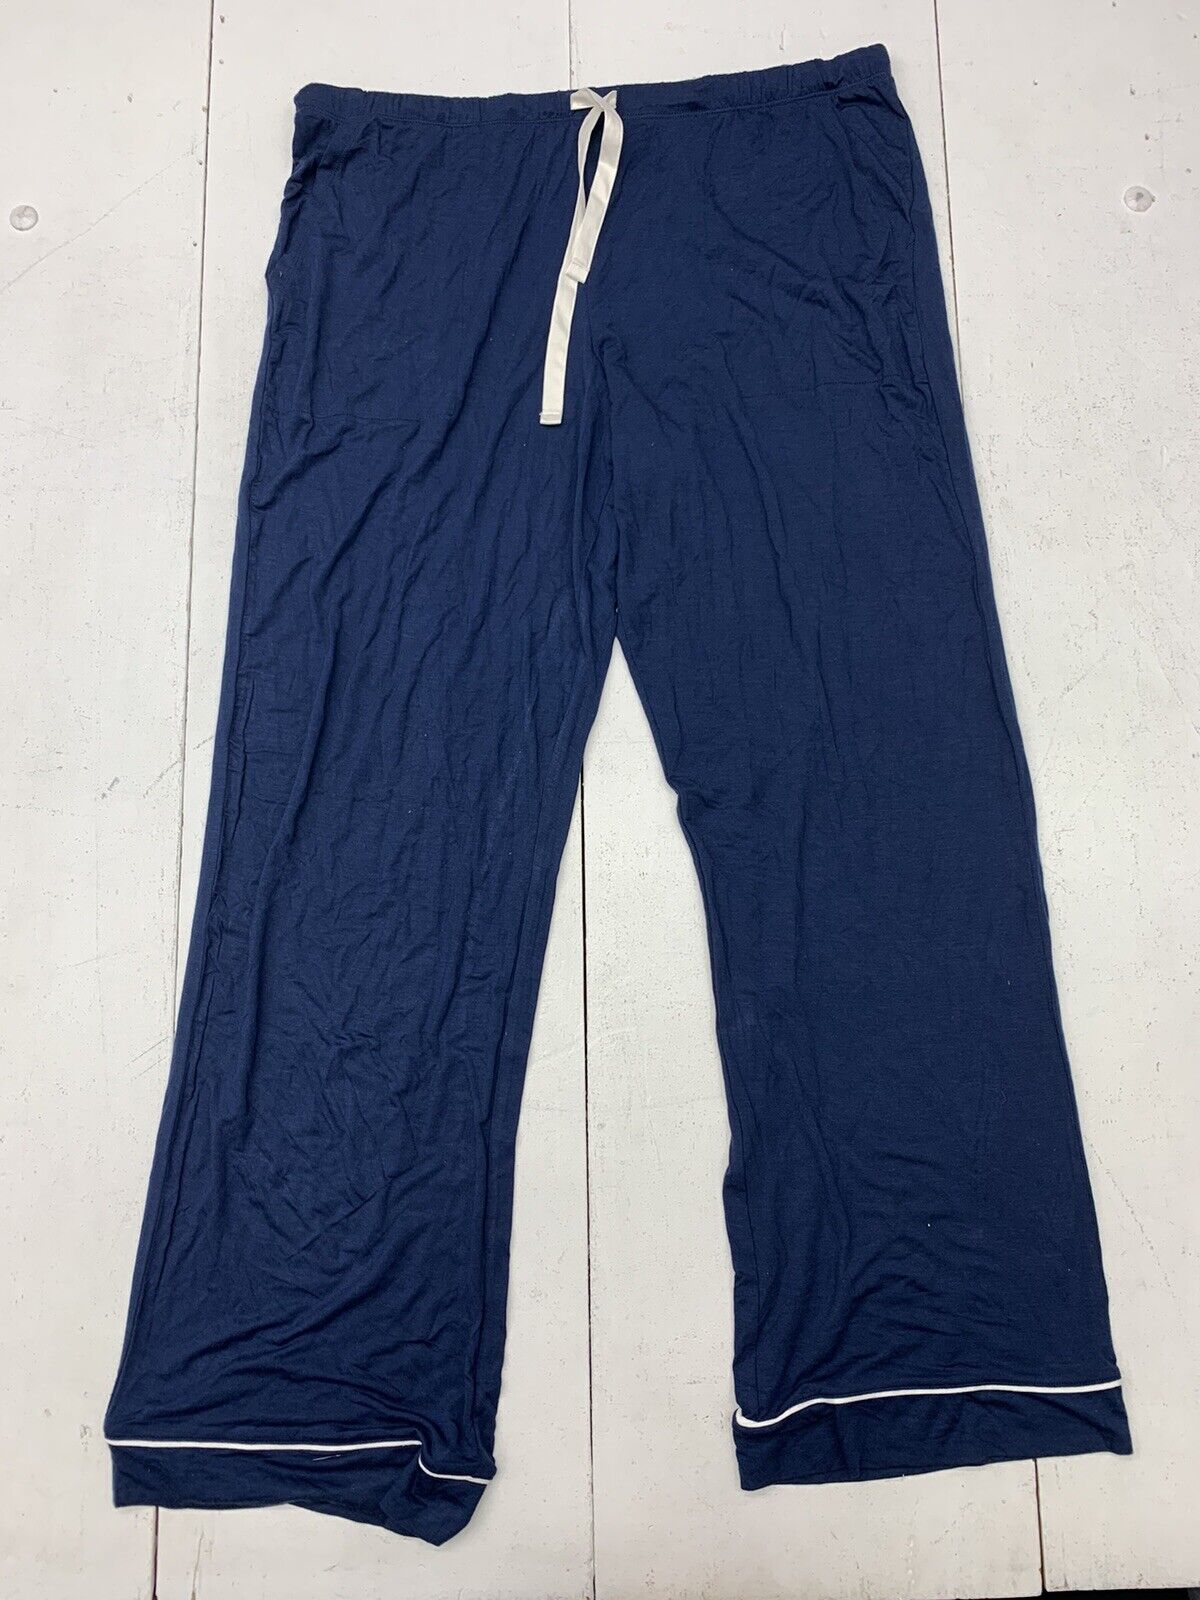 Stars Above Womens Blue Pajama Pants Size XL - beyond exchange